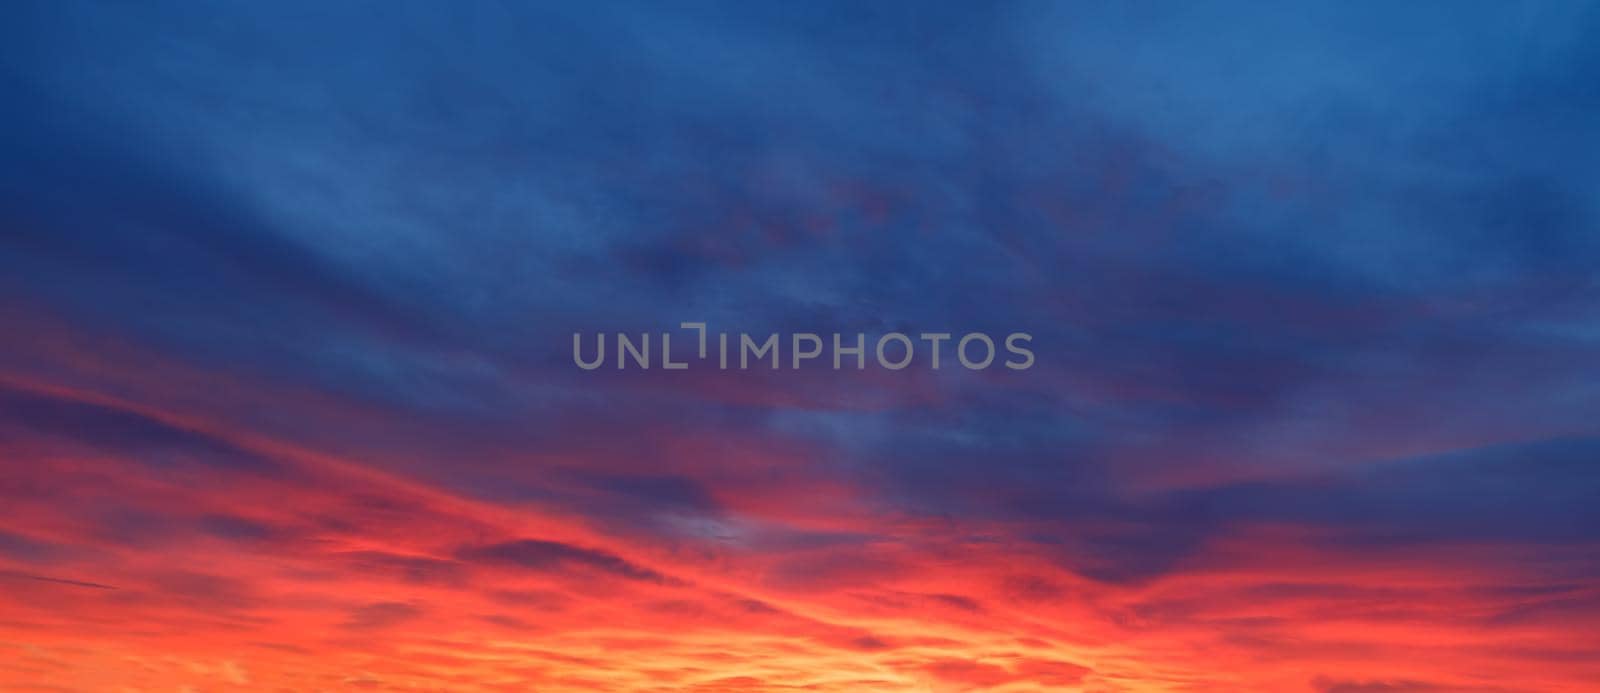 Dramatic sunset and sunrise sky by palinchak